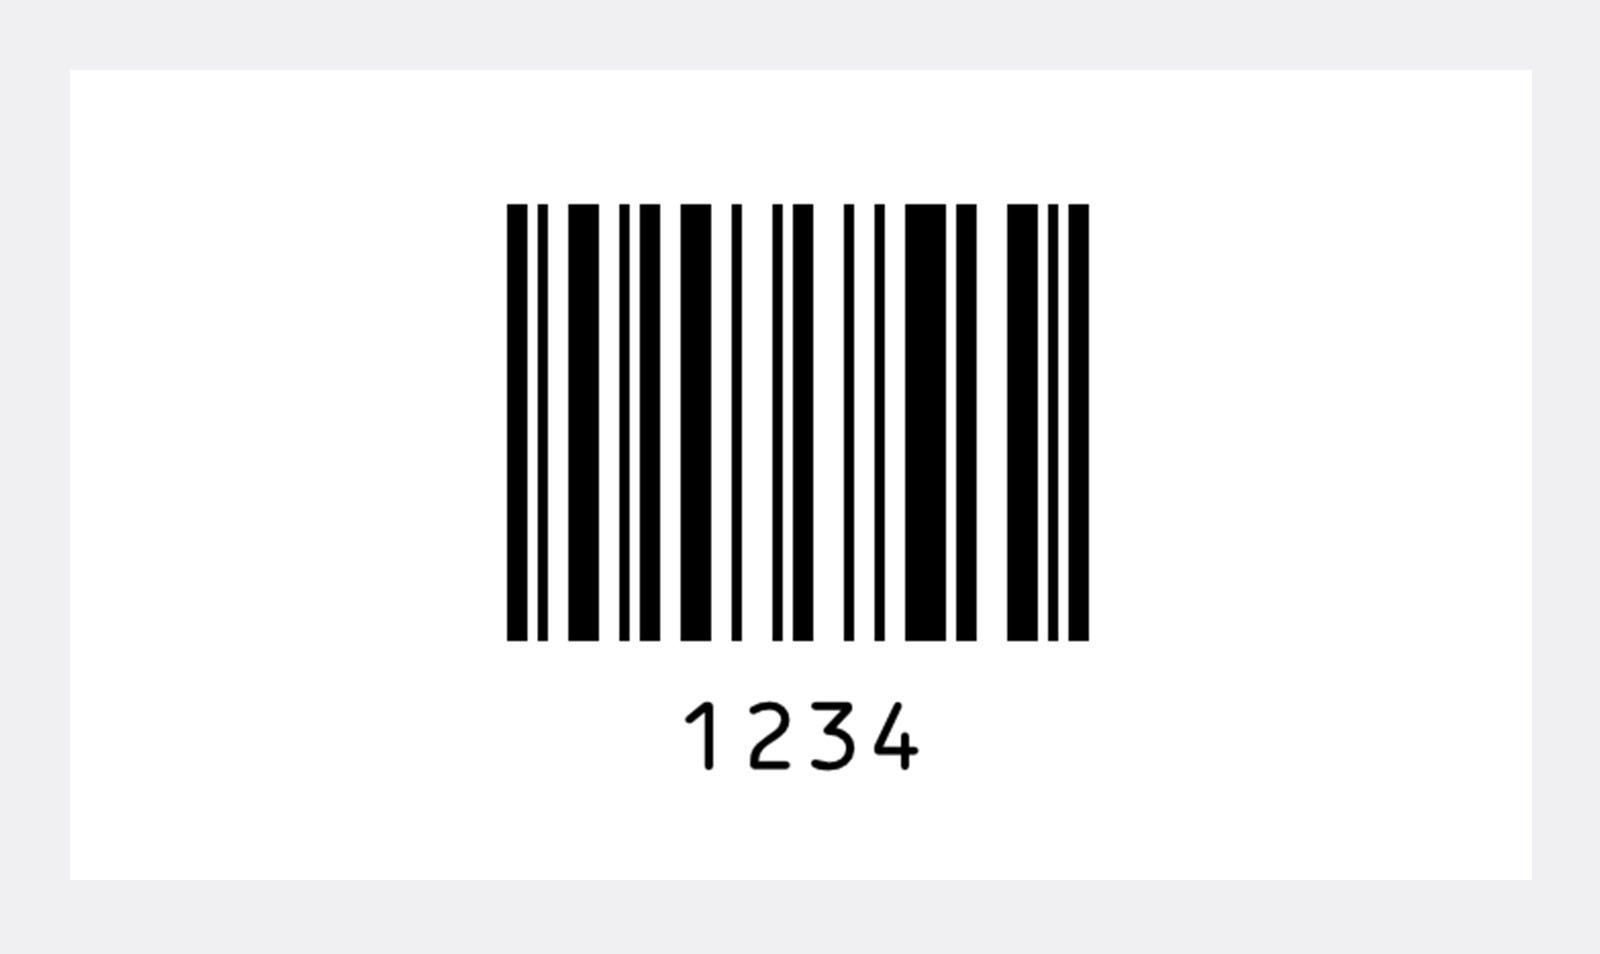 Barcode representing 1234